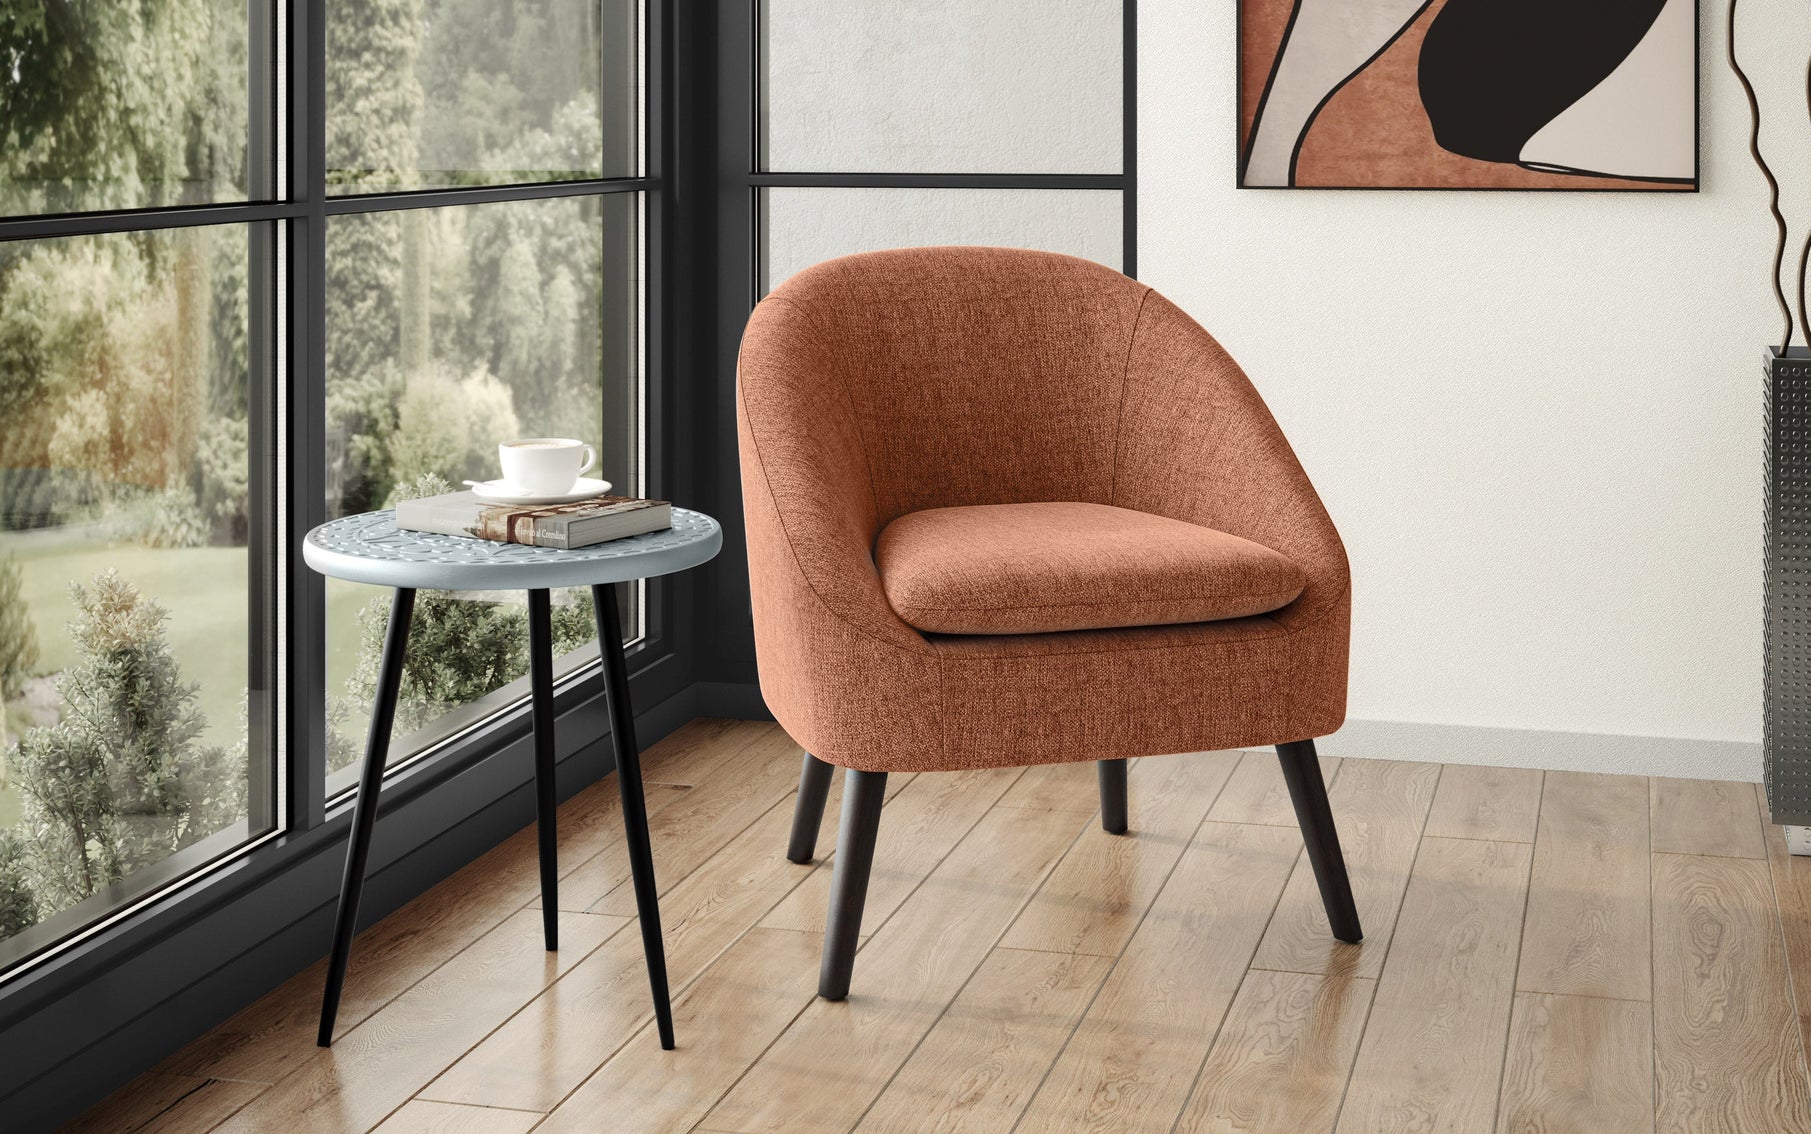 Rust | Redding Accent Chair